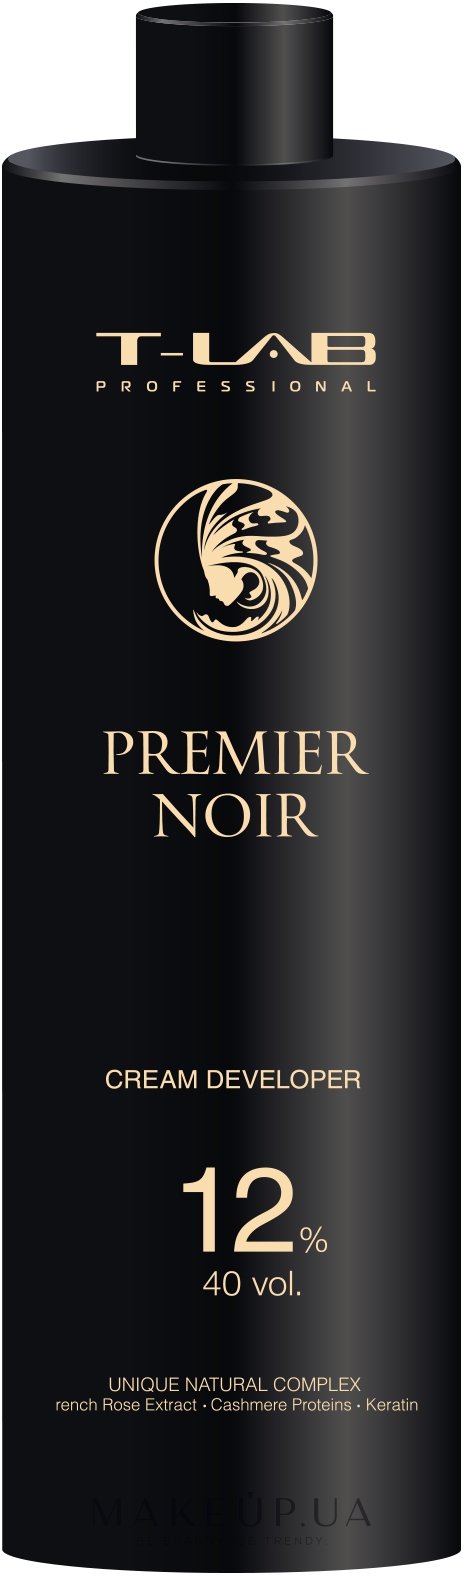 Крем-проявник 12% - T-Lab Professional Premier Noir Cream Developer 40 vol. 12% — фото 1000ml